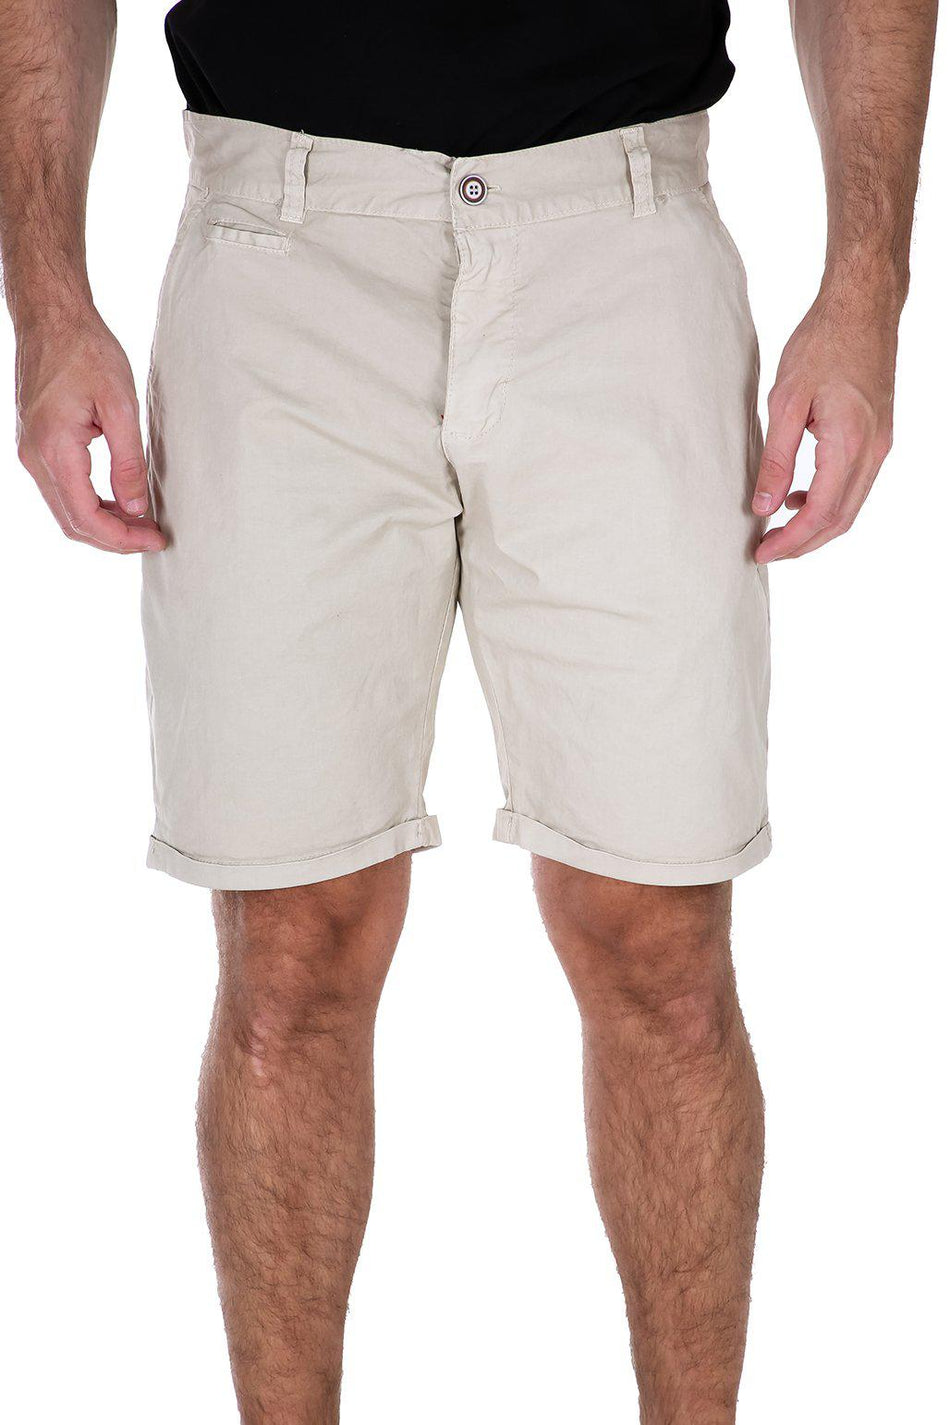 Men's Essentials Cotton Shorts Solid Khaki